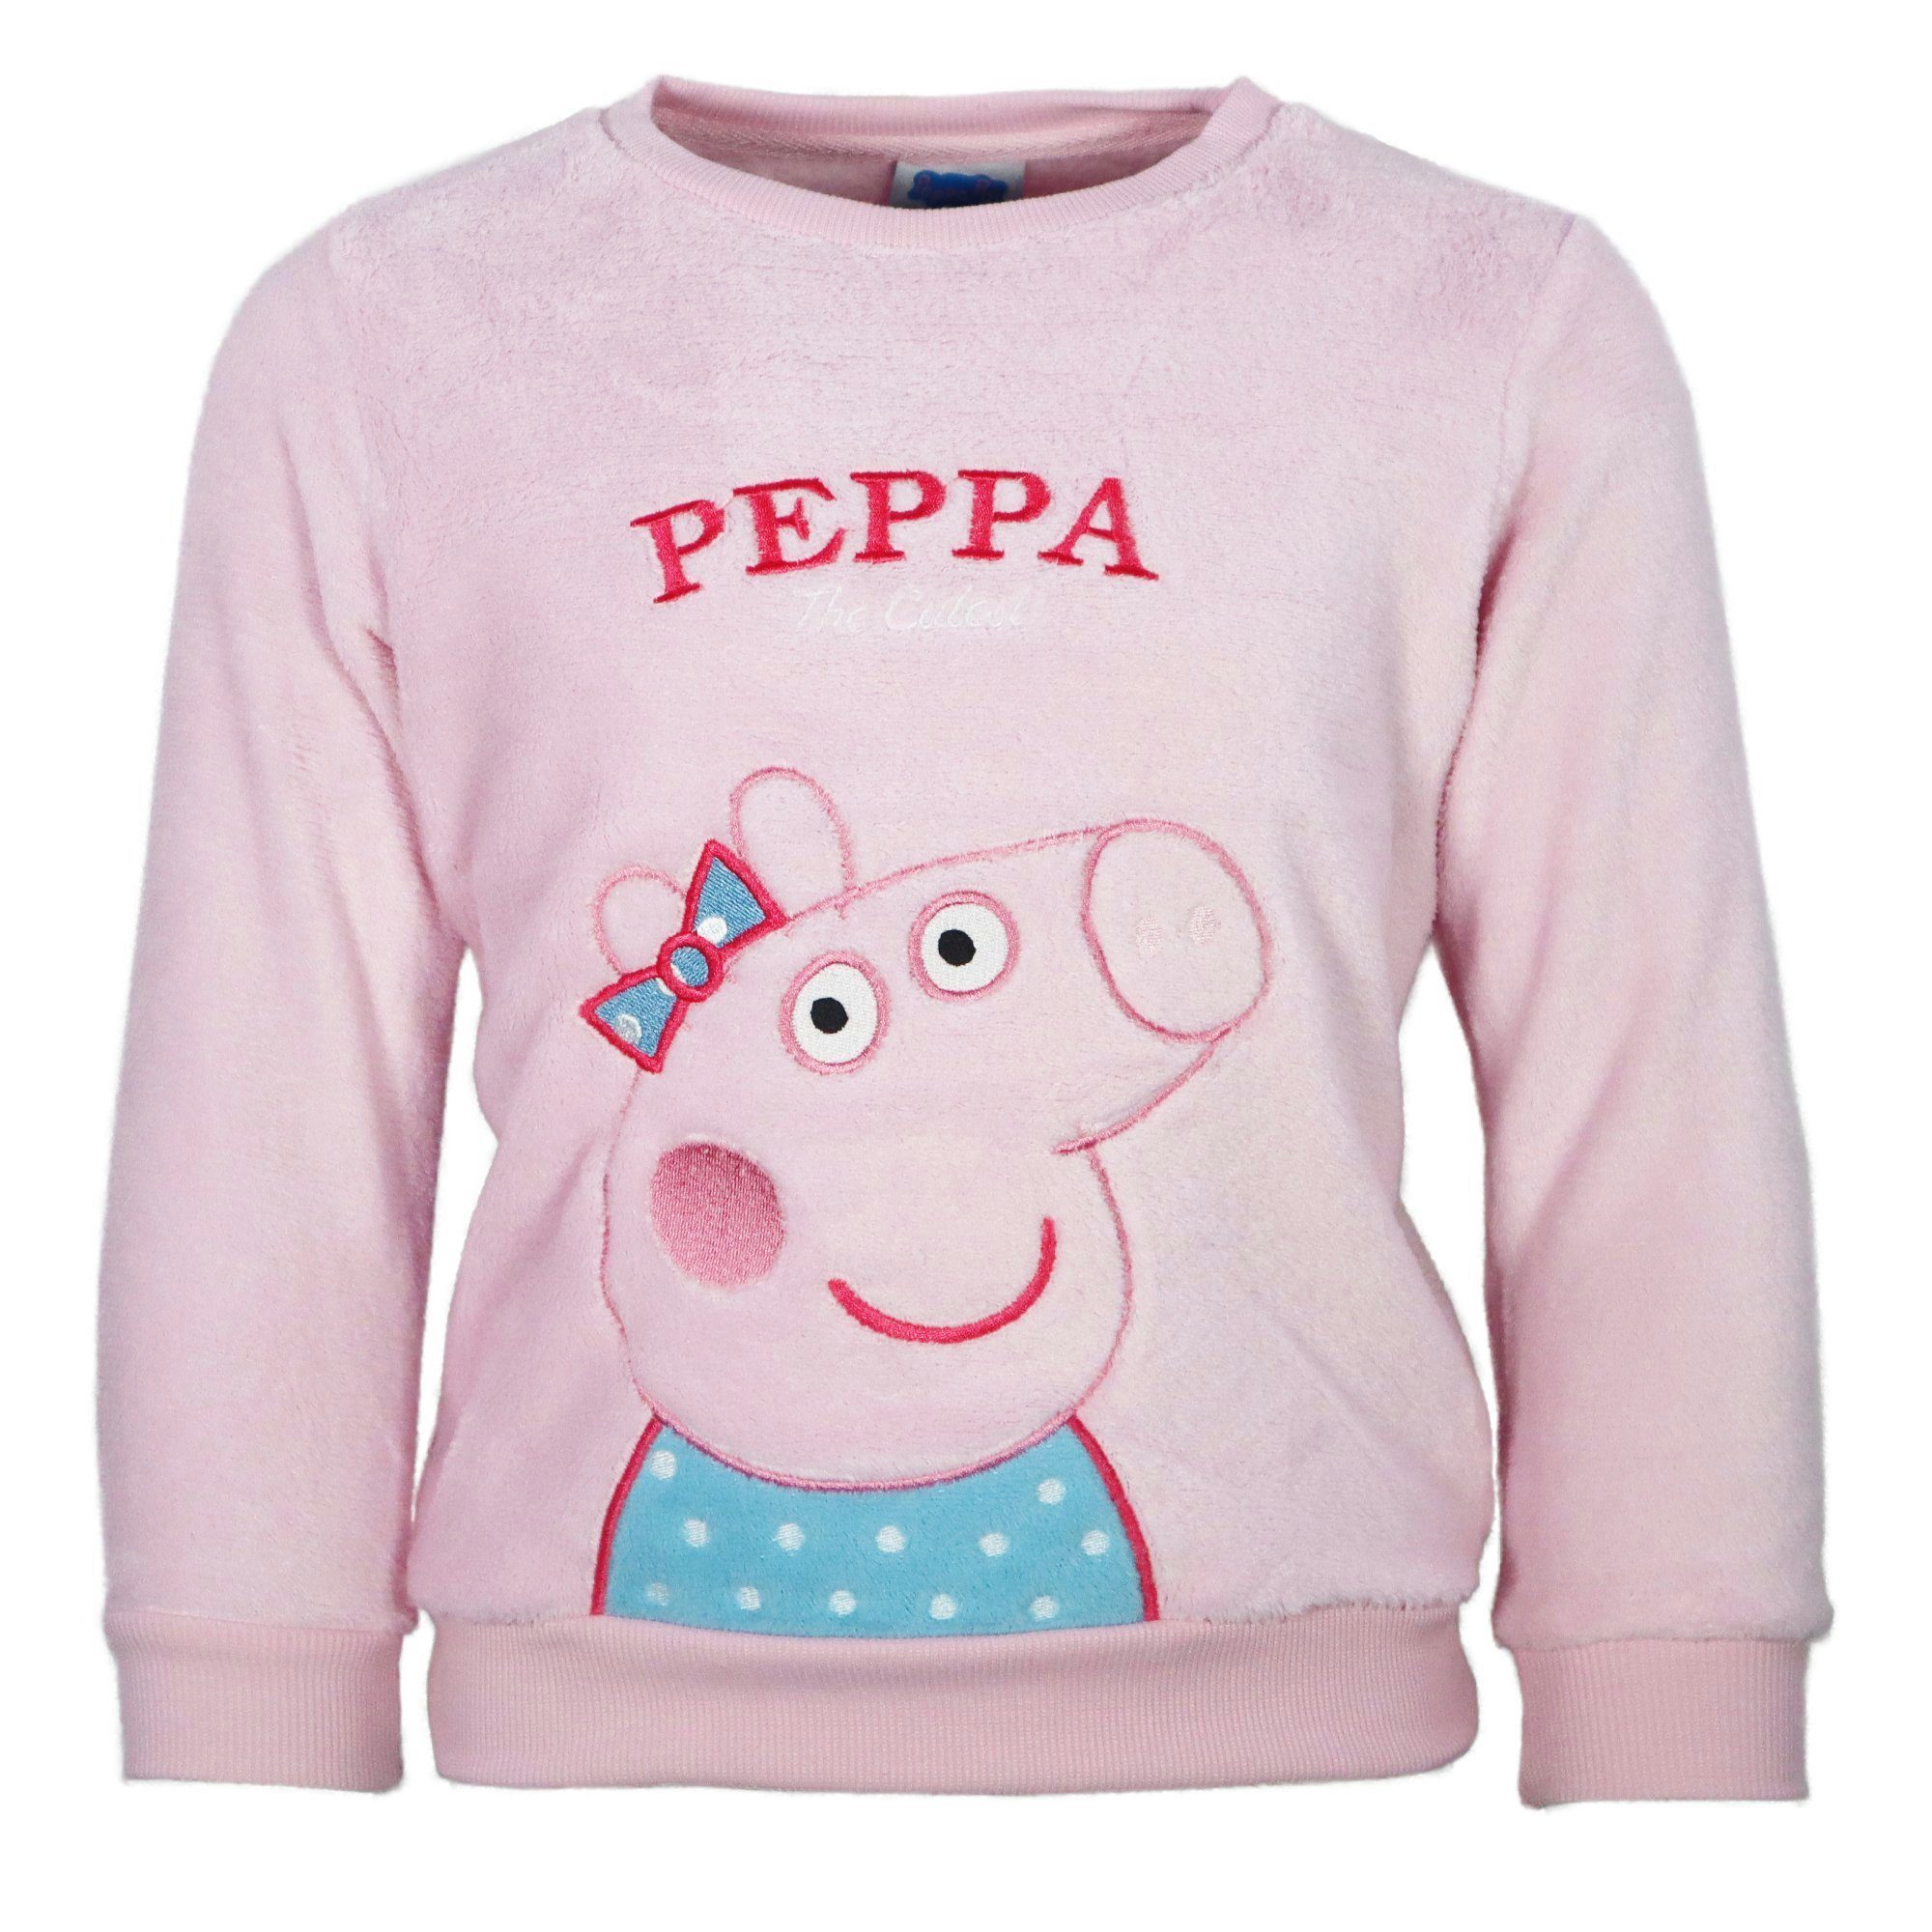 Pulli Kinder Wutz 98 Pig Mädchen bis Gr. Pig Peppa Fleece Peppa Sweater Coral 116 Pullover